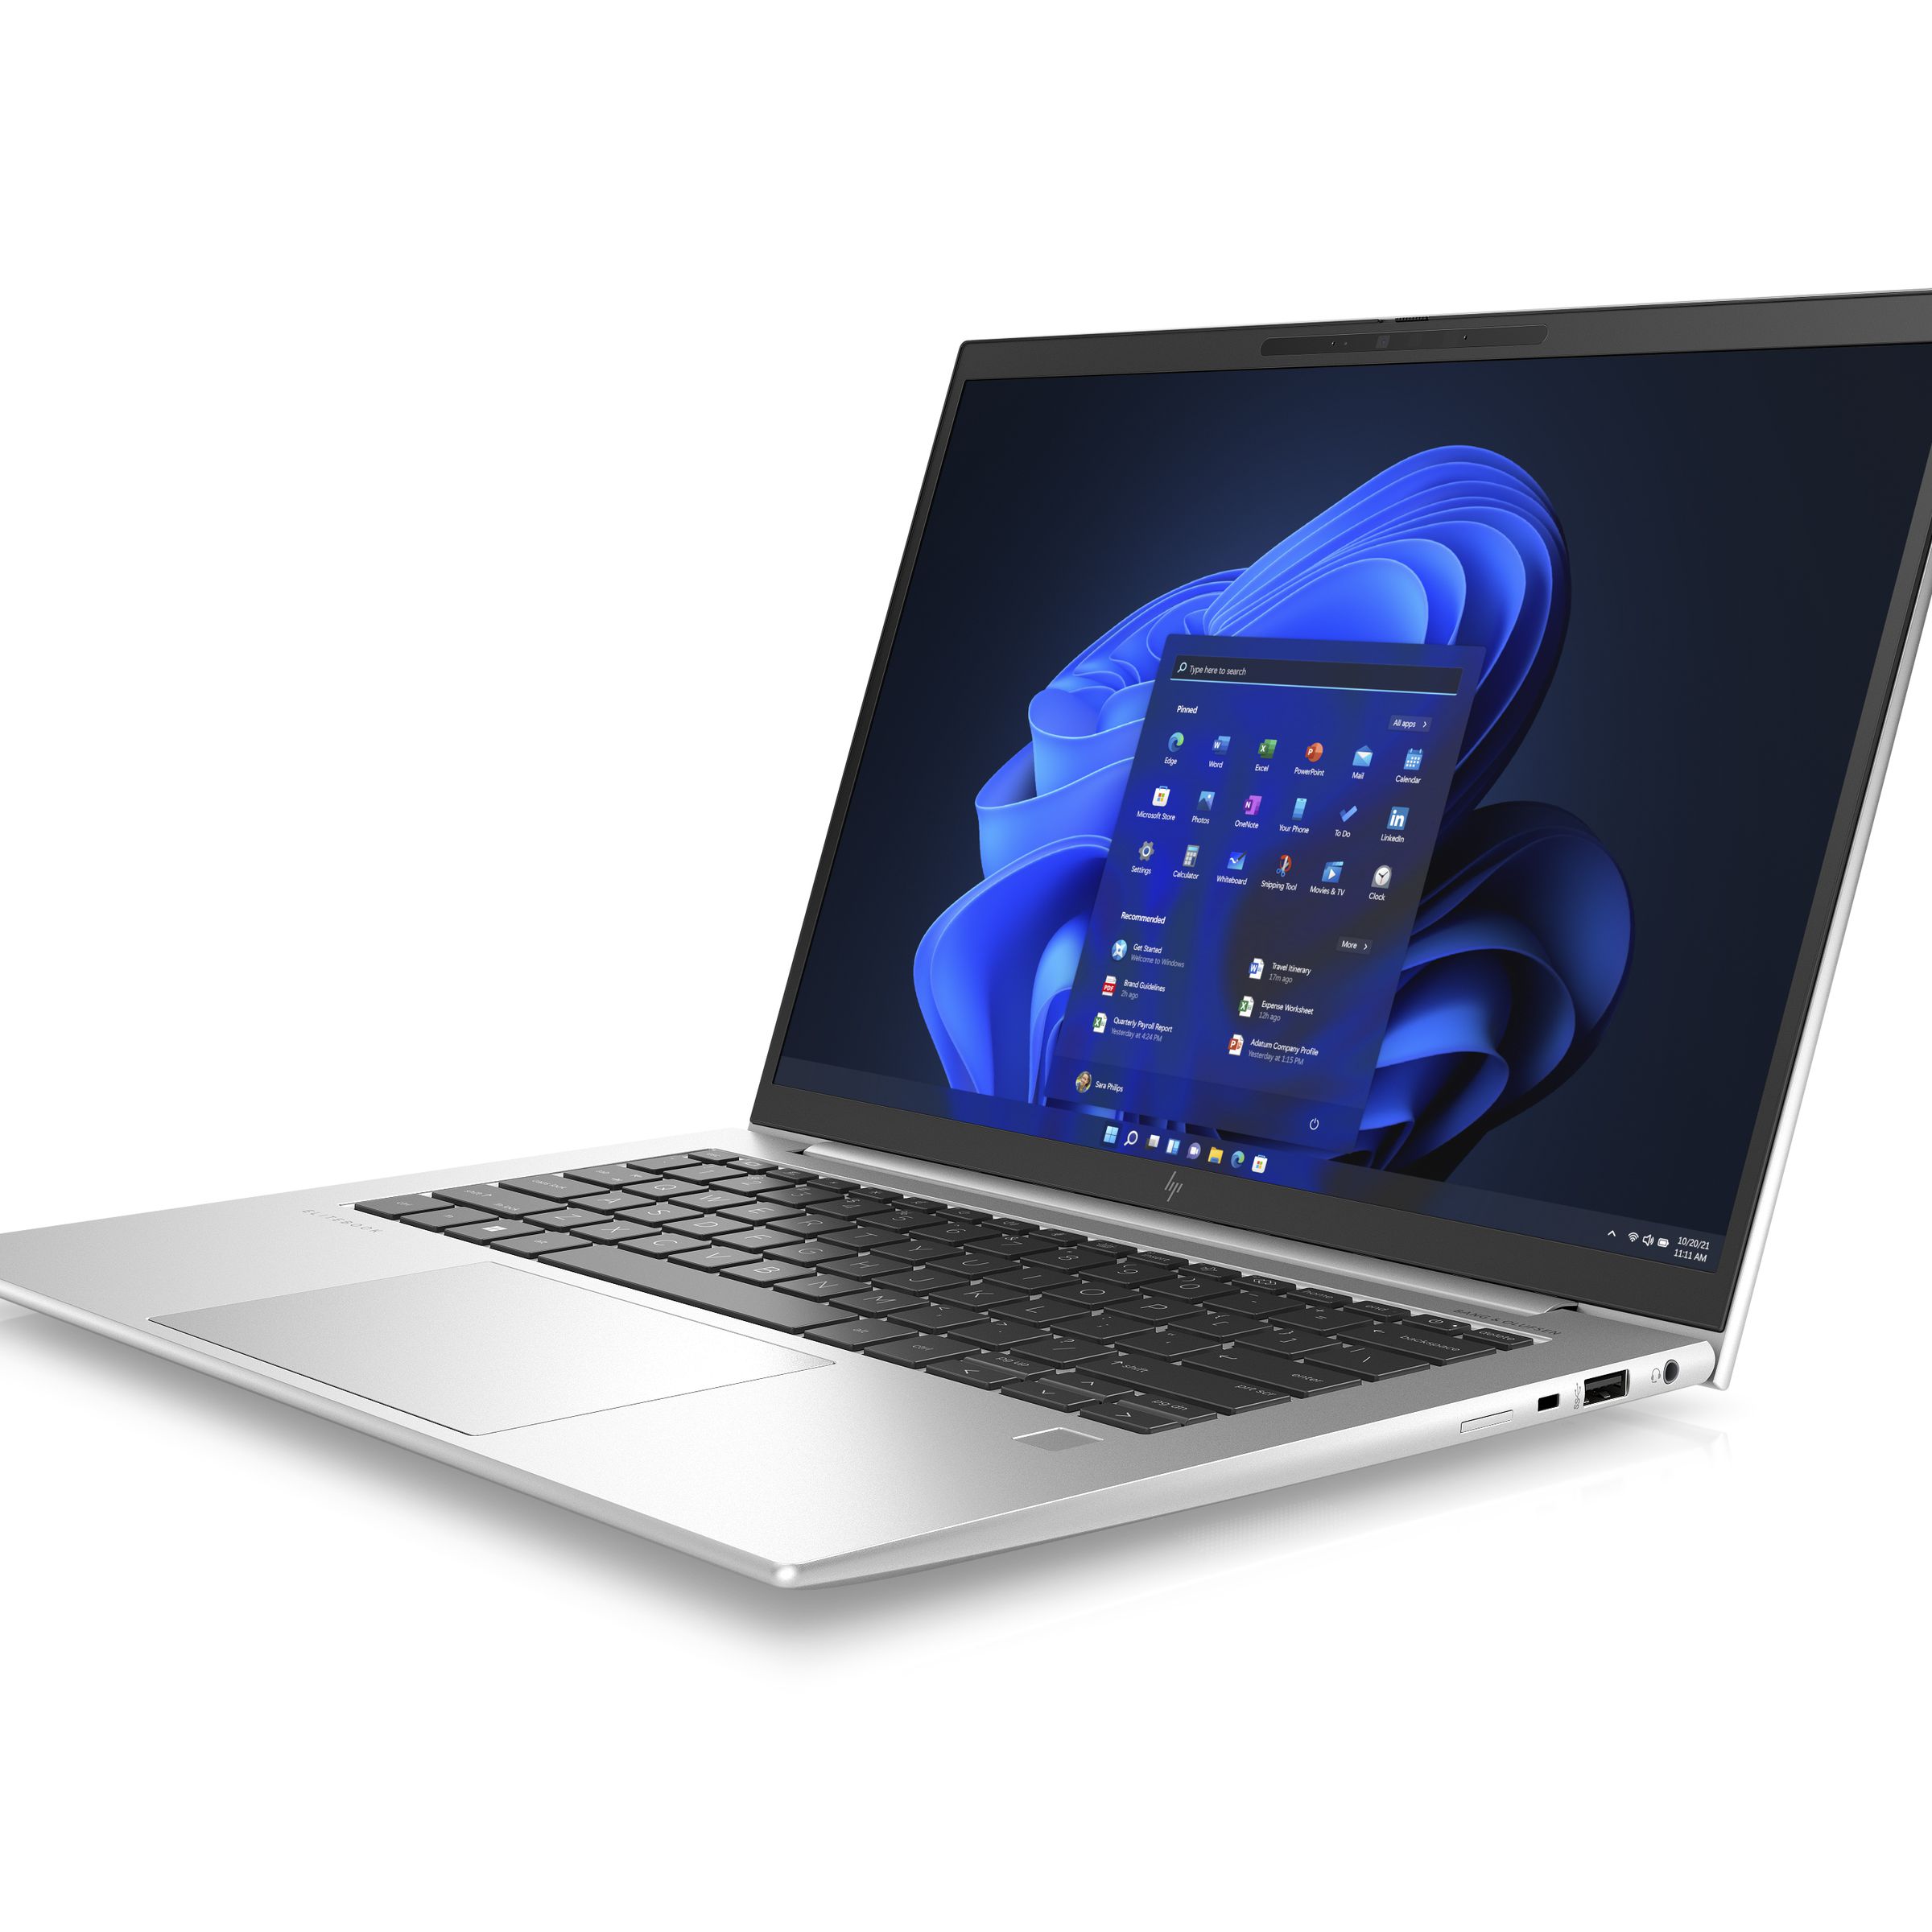 The HP EliteBook 1040 G9 has a 14-inch IPS display.